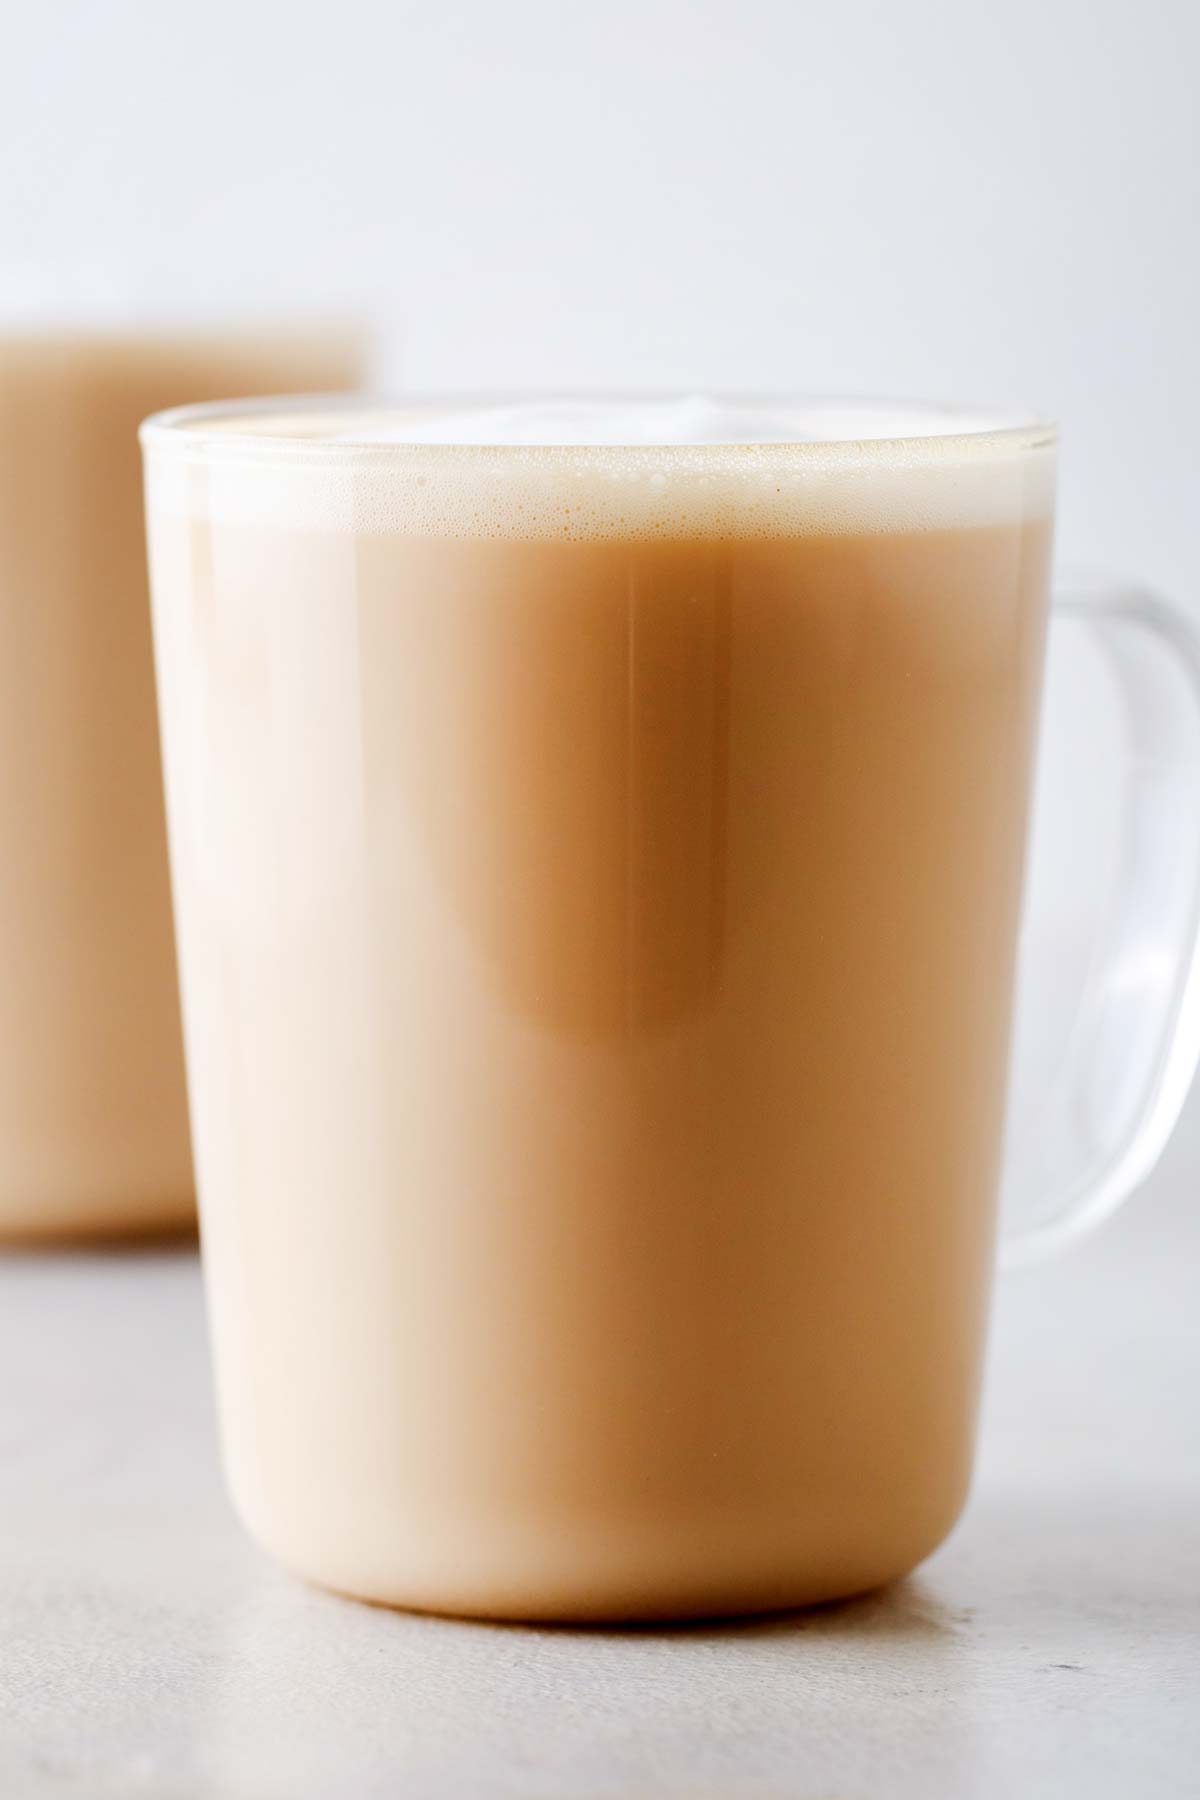 Starbucks Blonde Vanilla Latte copycat drink in a glass mug.